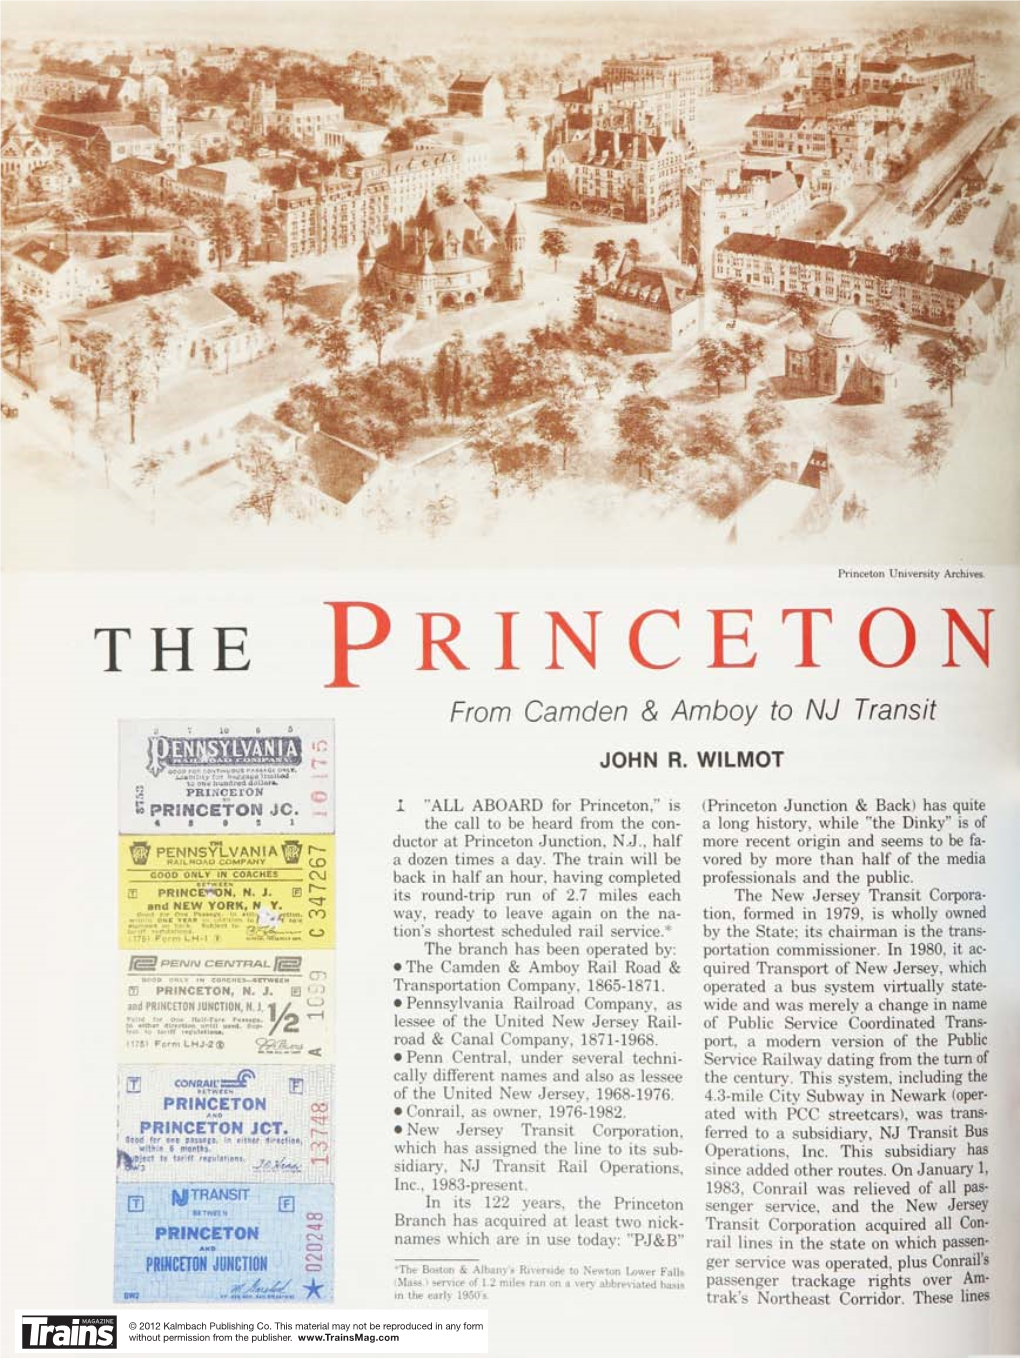 (Left) of the Princeton University Campus